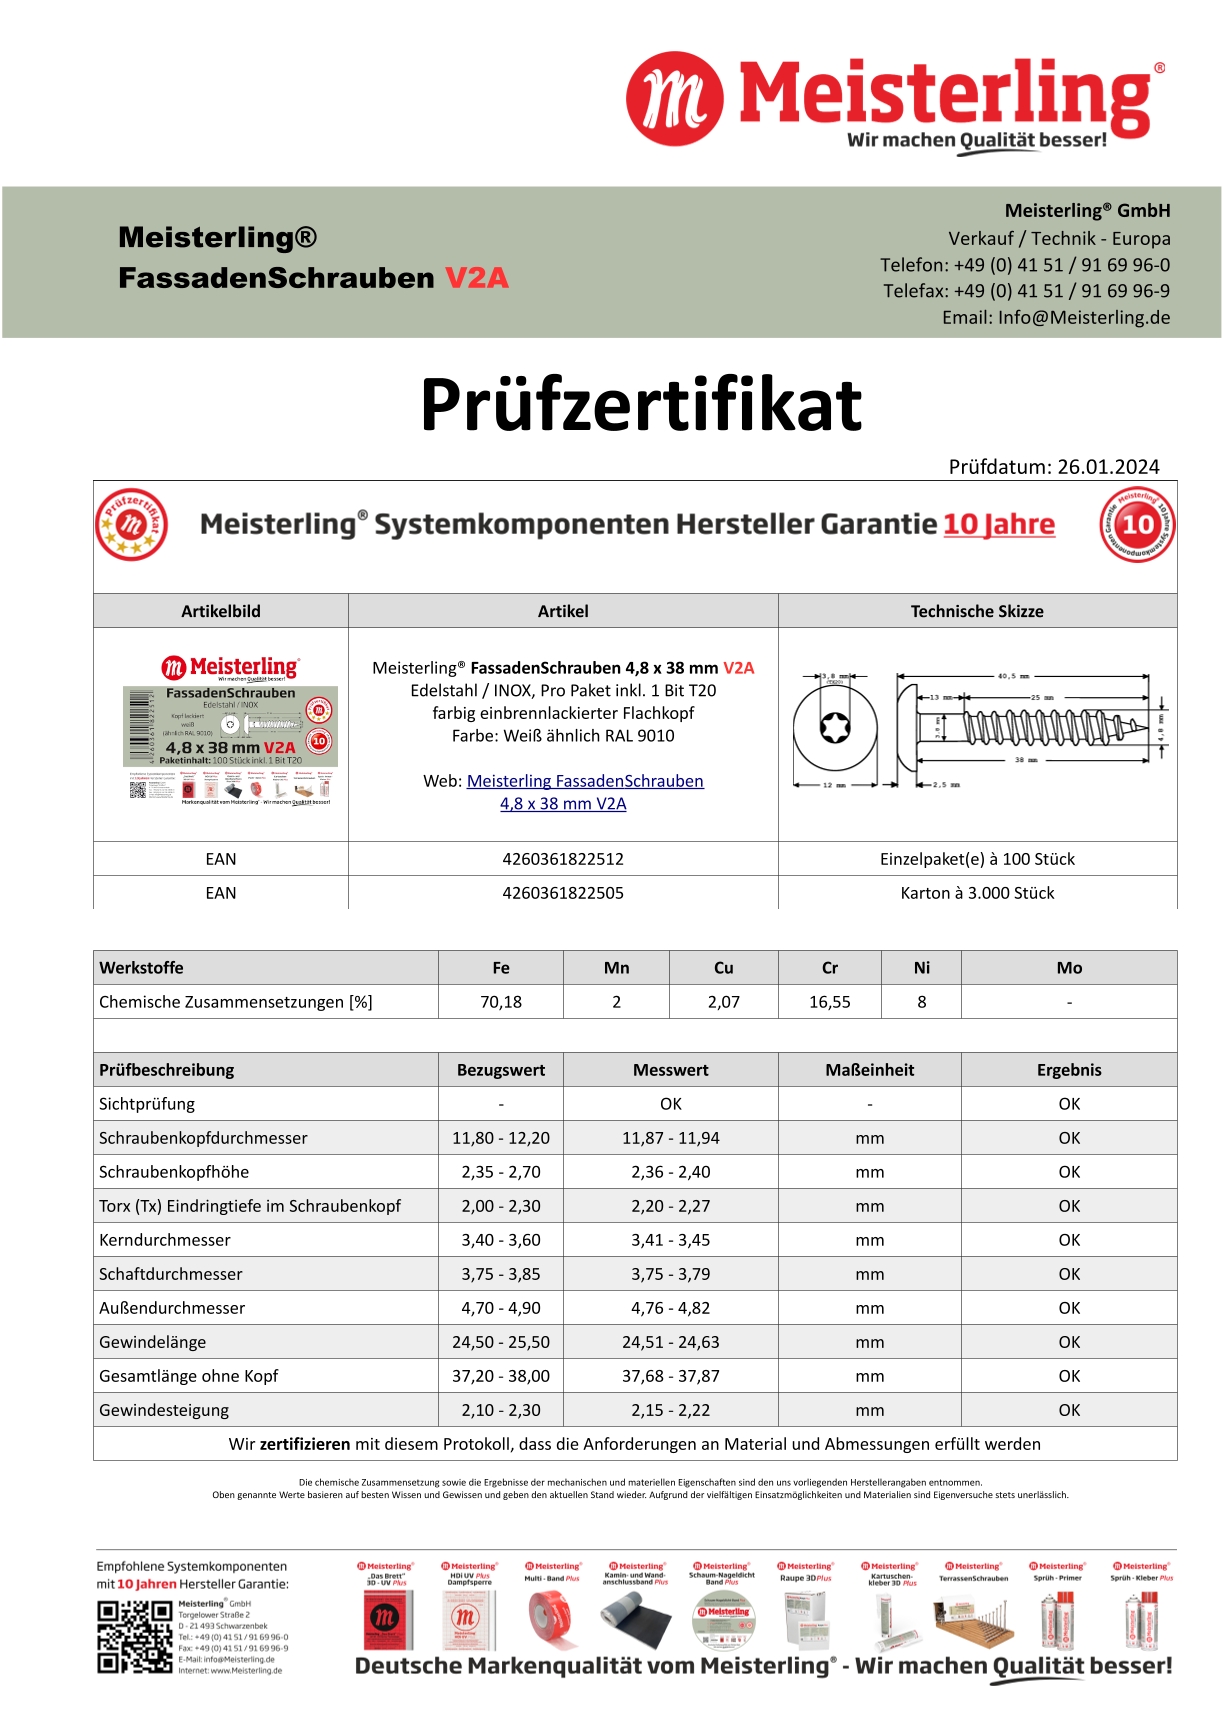 Prüfzertifikat Meisterling® FassadenSchrauben 4,8 x 38 mm V2a weiß